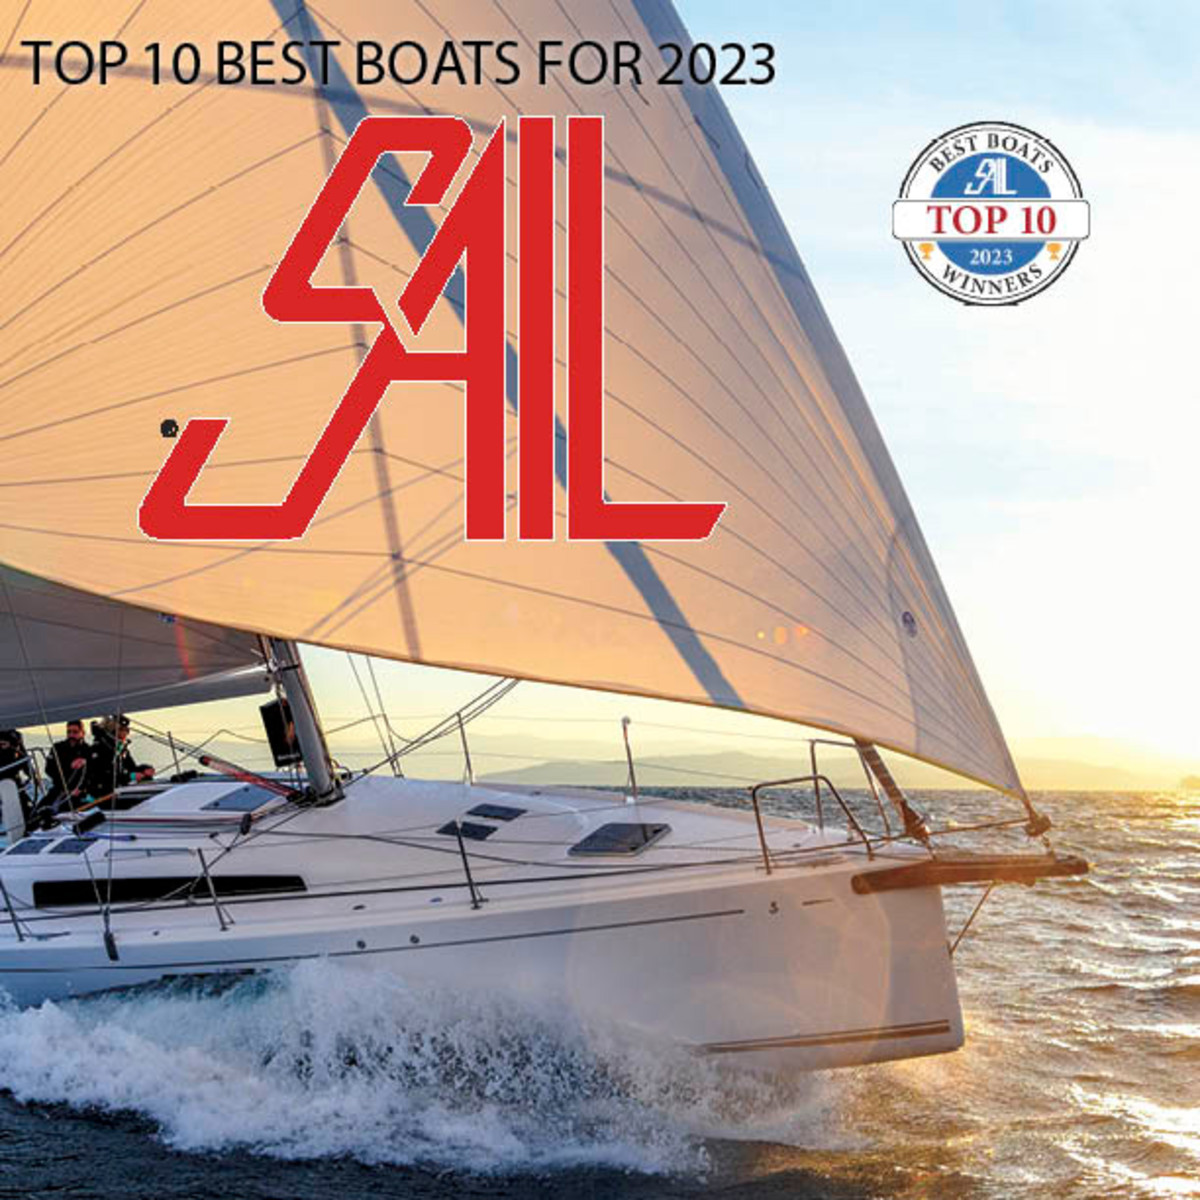 sailboat prices 2023